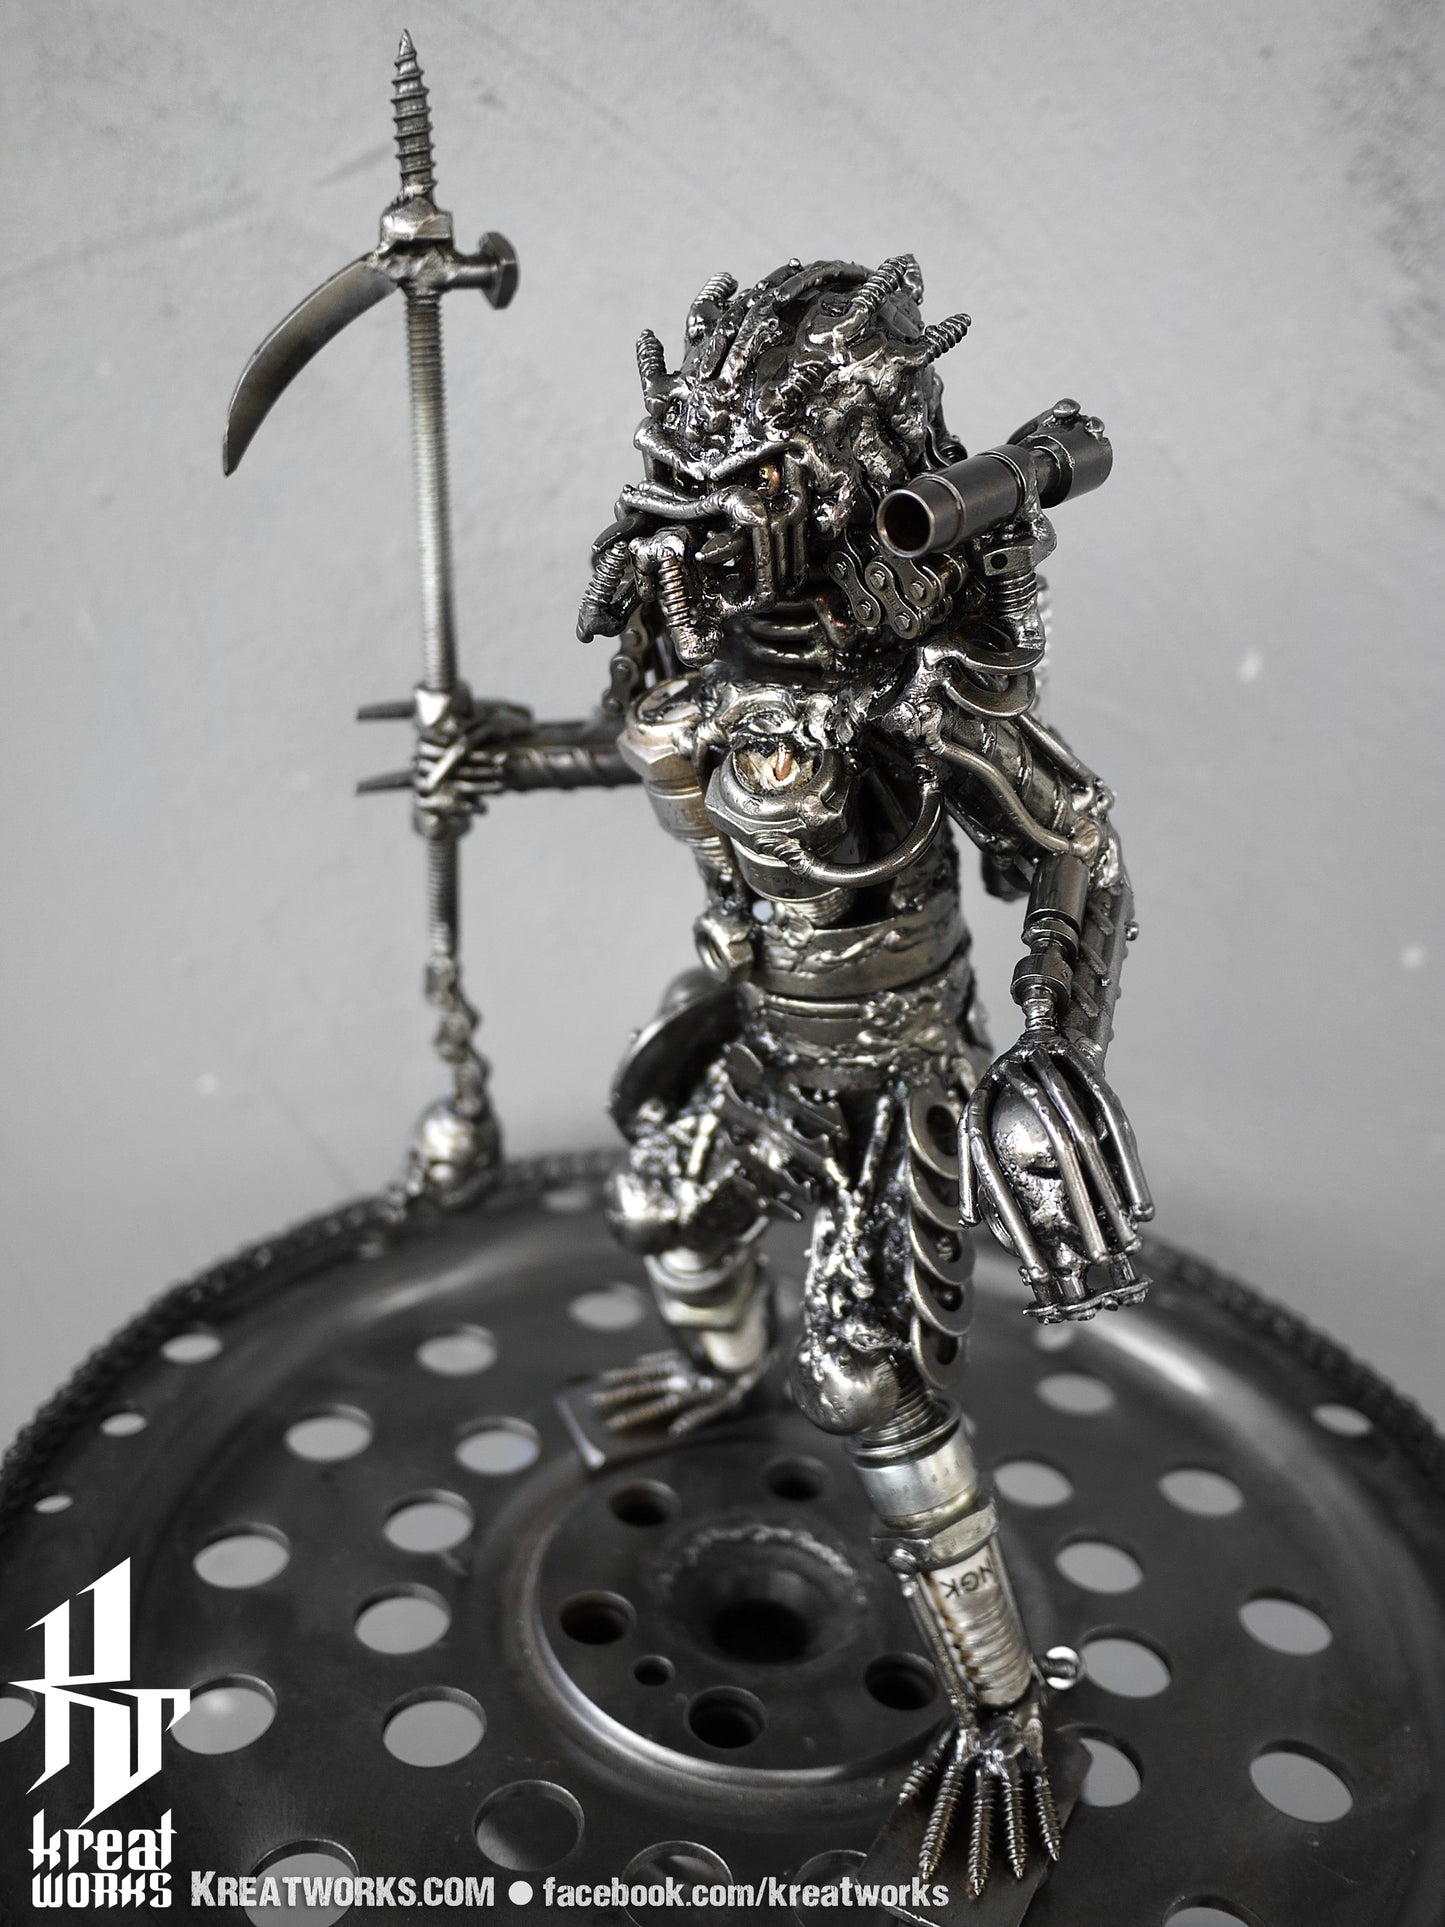 Mini Metal Hunter : Scythe (small item) / Recycle Metal Sustainable Sculpture Art